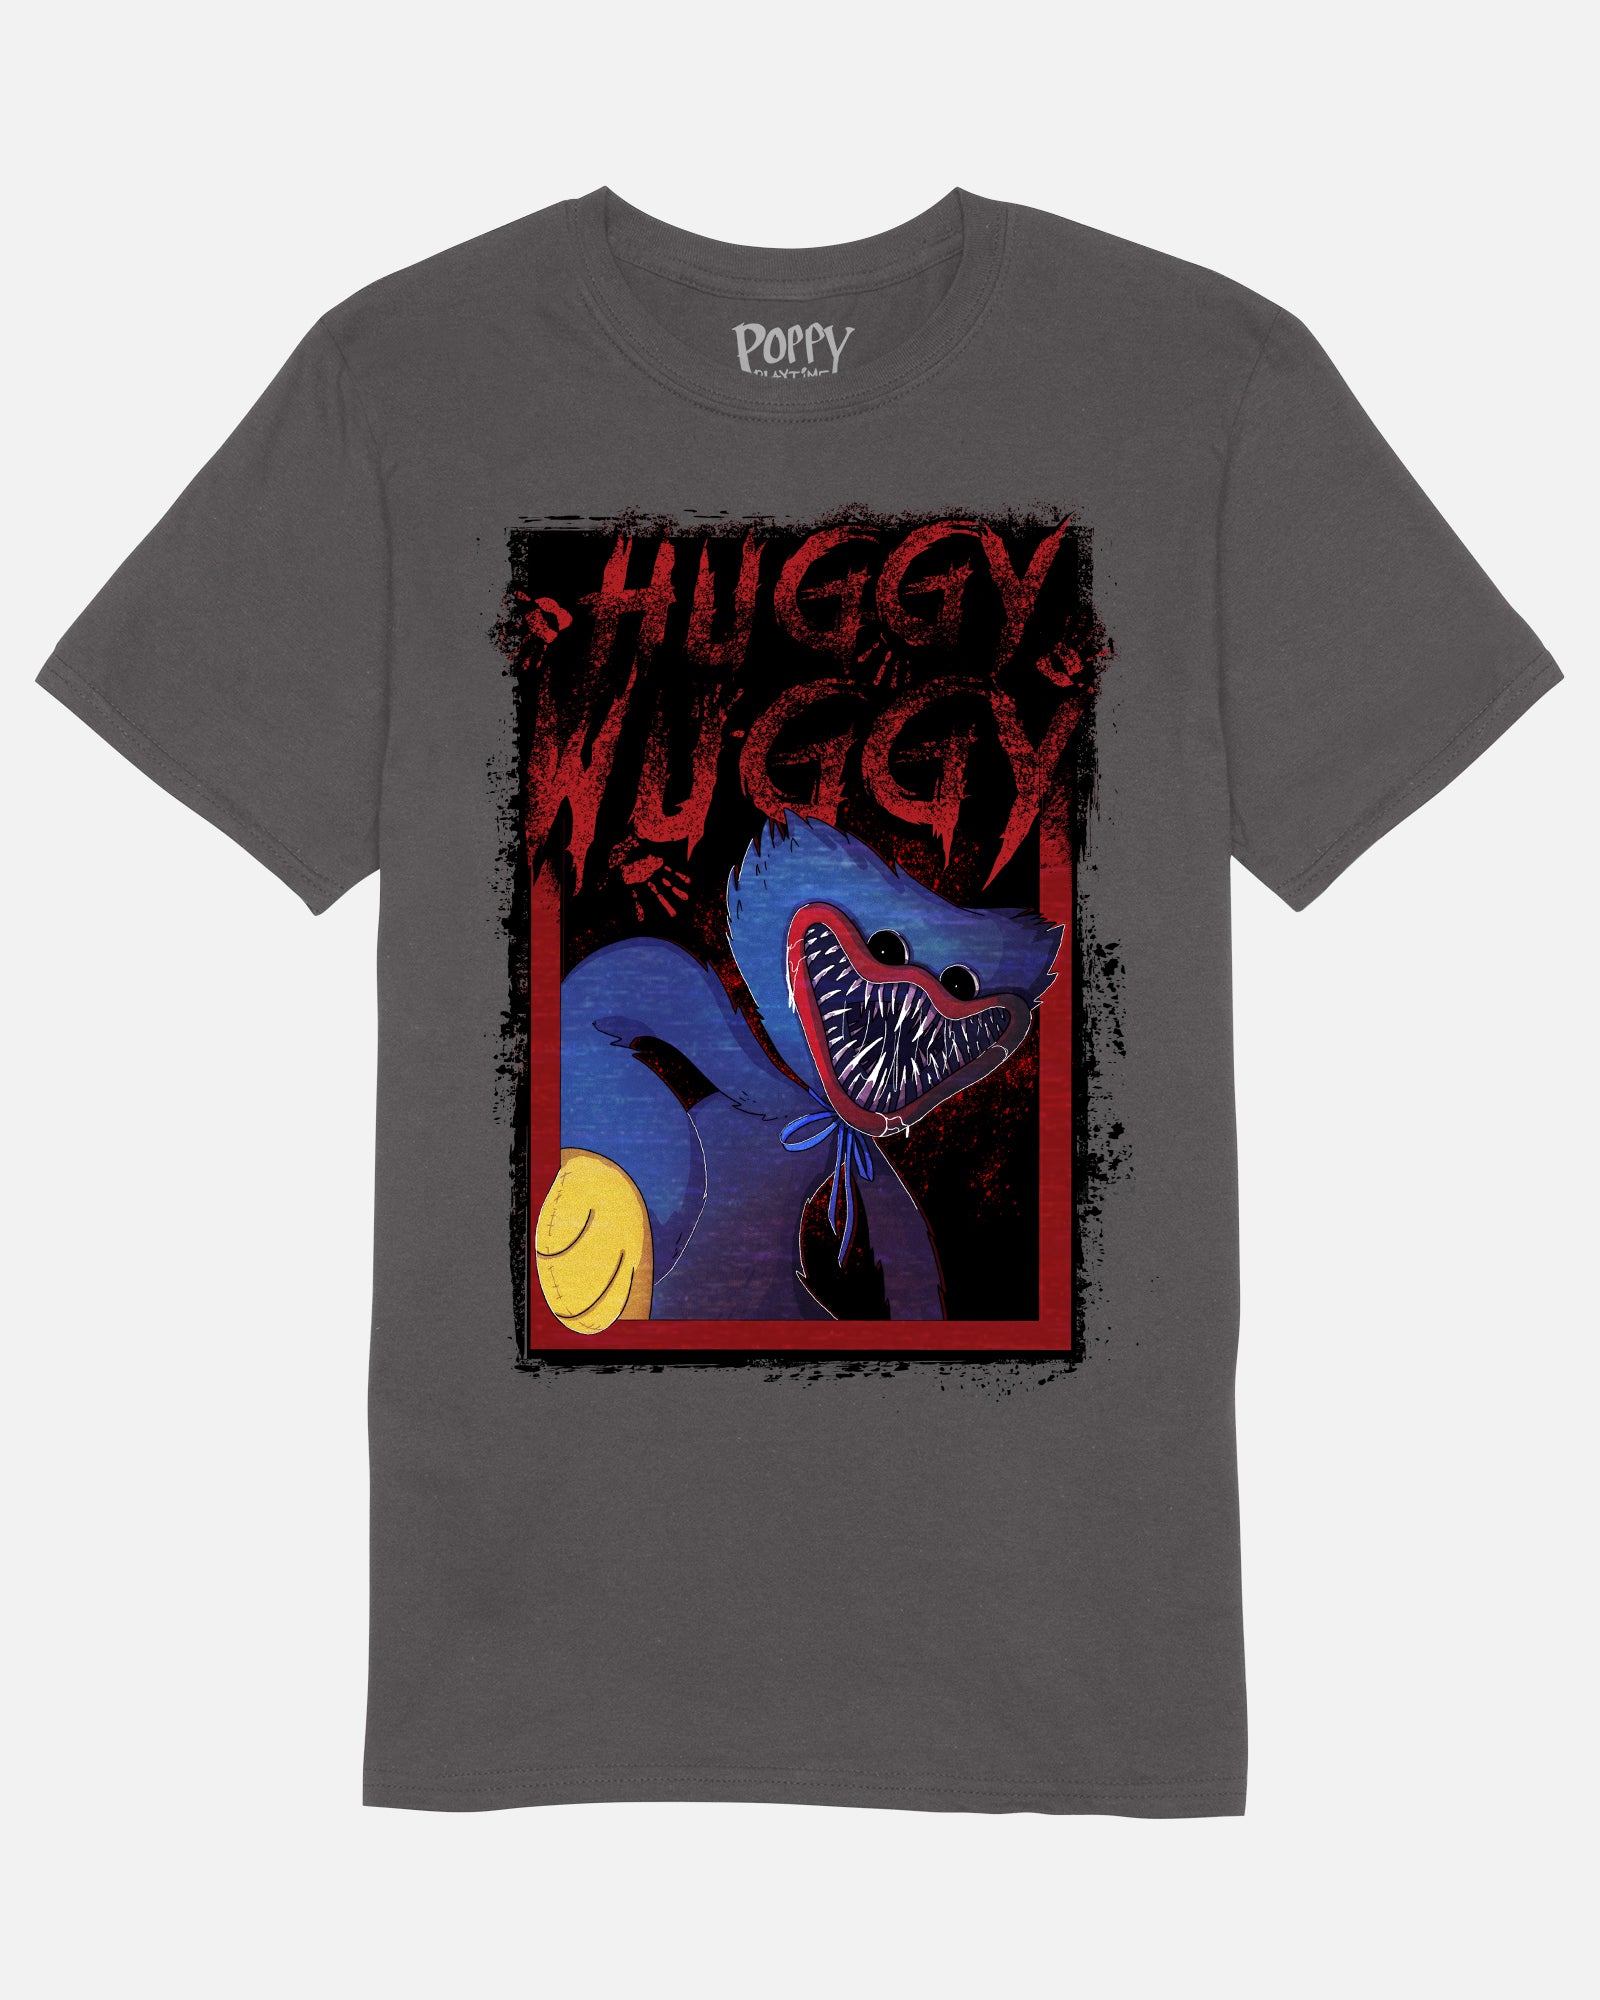 huggy wuggy attack tshirt